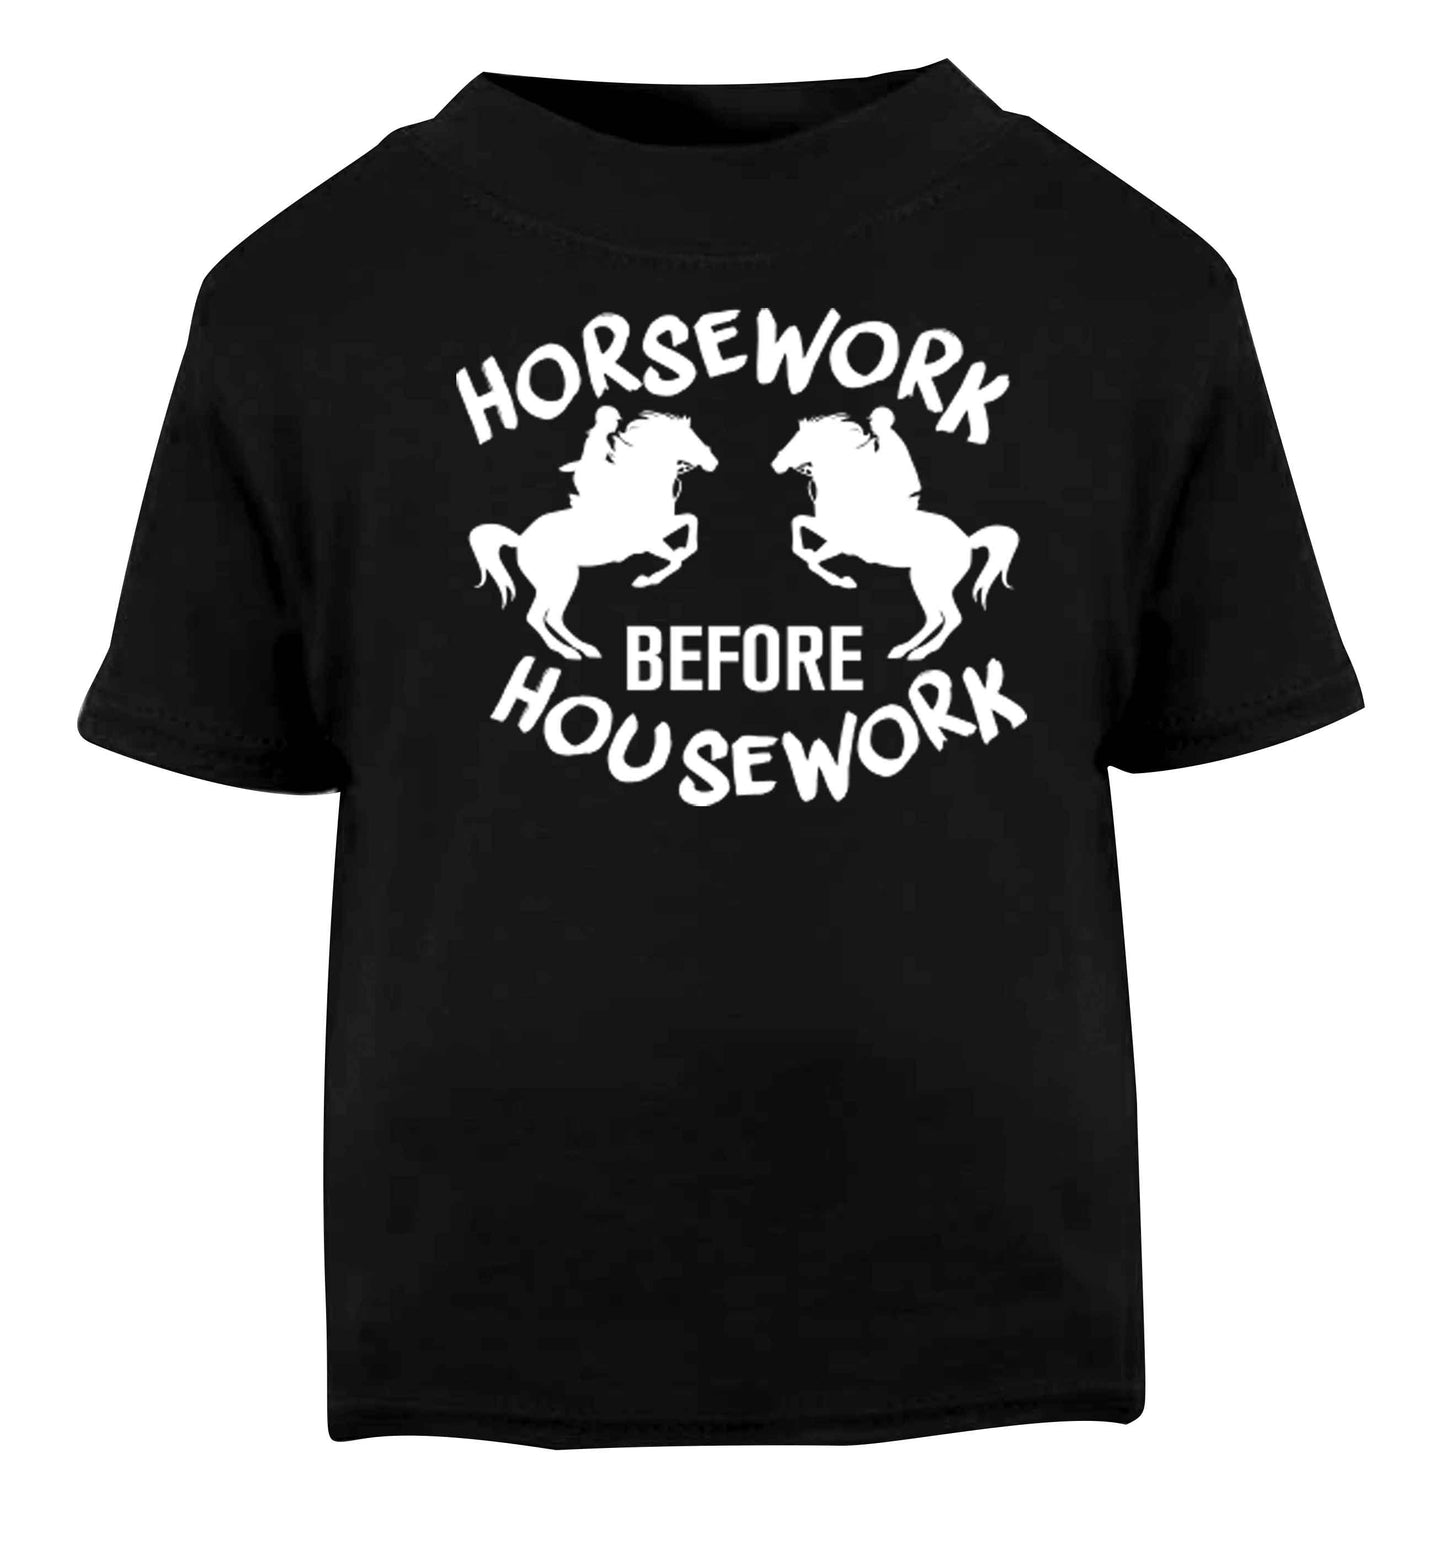 Horsework before housework Black baby toddler Tshirt 2 years